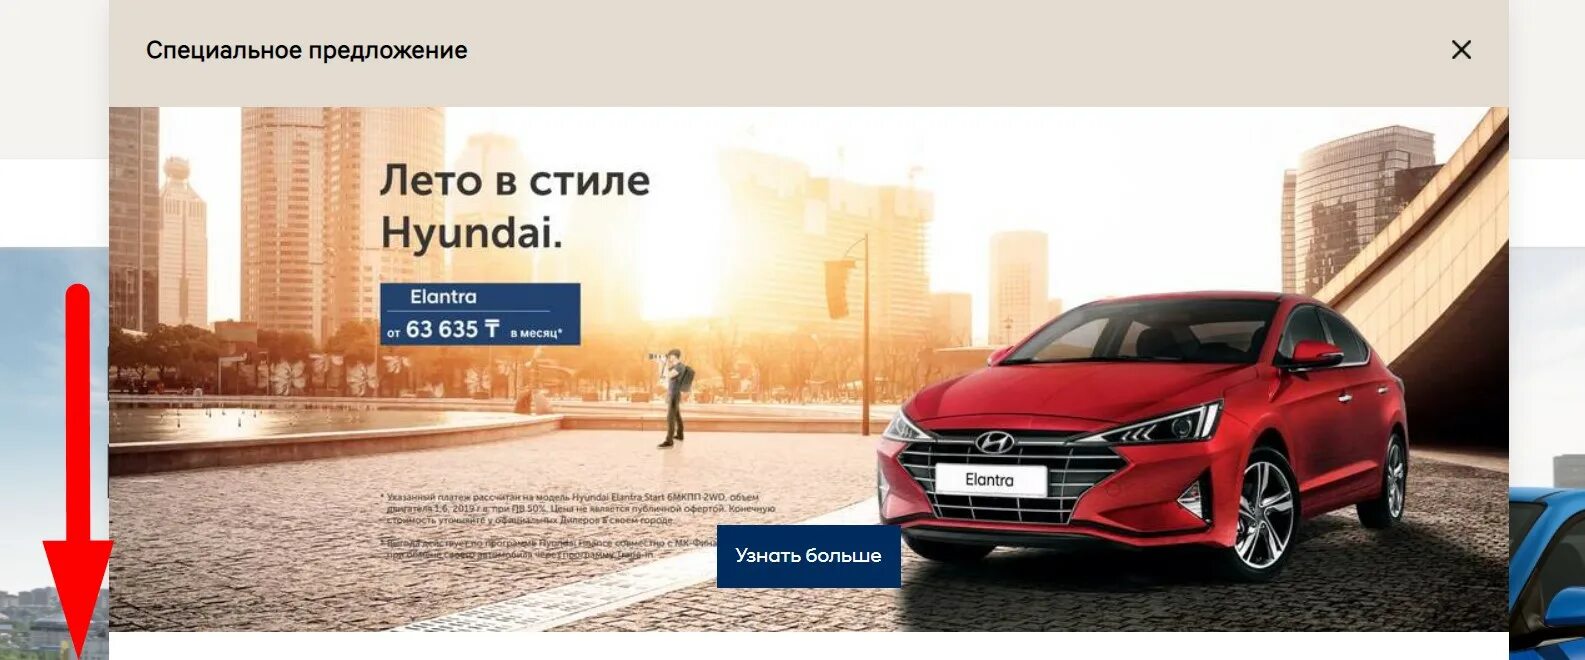 Сайт хендай казахстан. Реклама Hyundai. Хендай кз. Hyundai Казахстан. Хюндай в Казахстане автосалон.